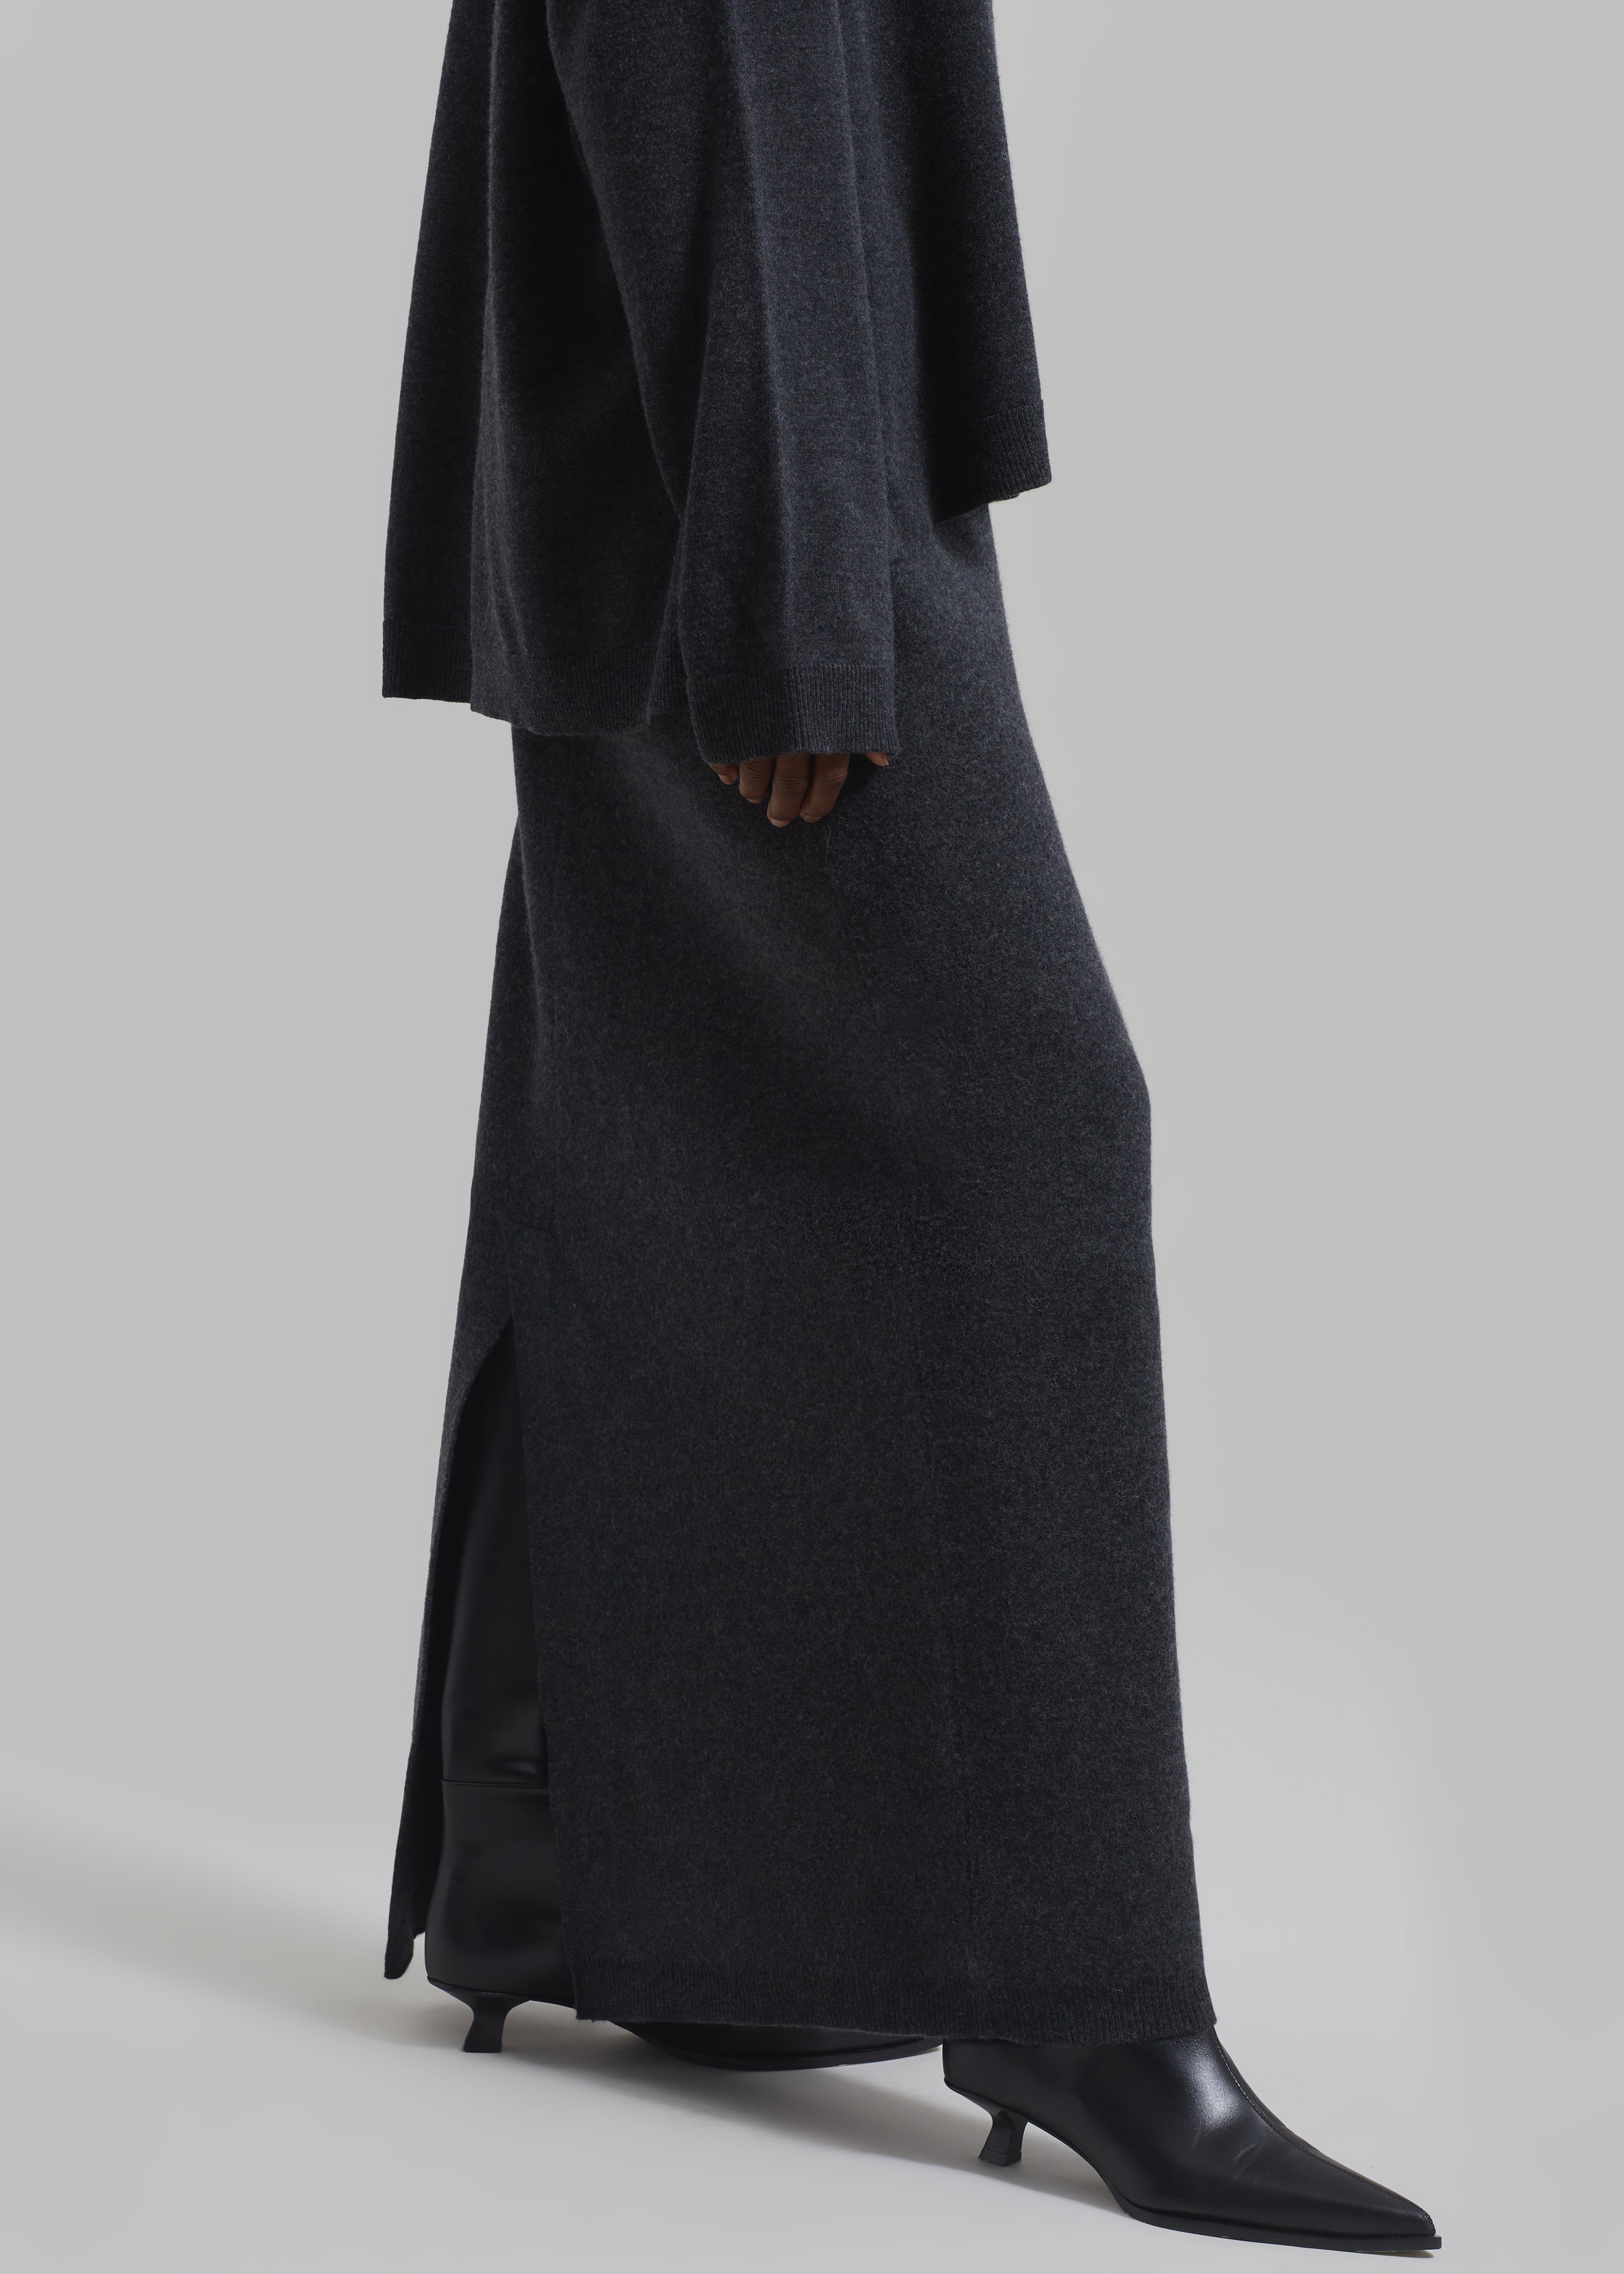 Bellamy Wool Skirt - Charcoal - 2